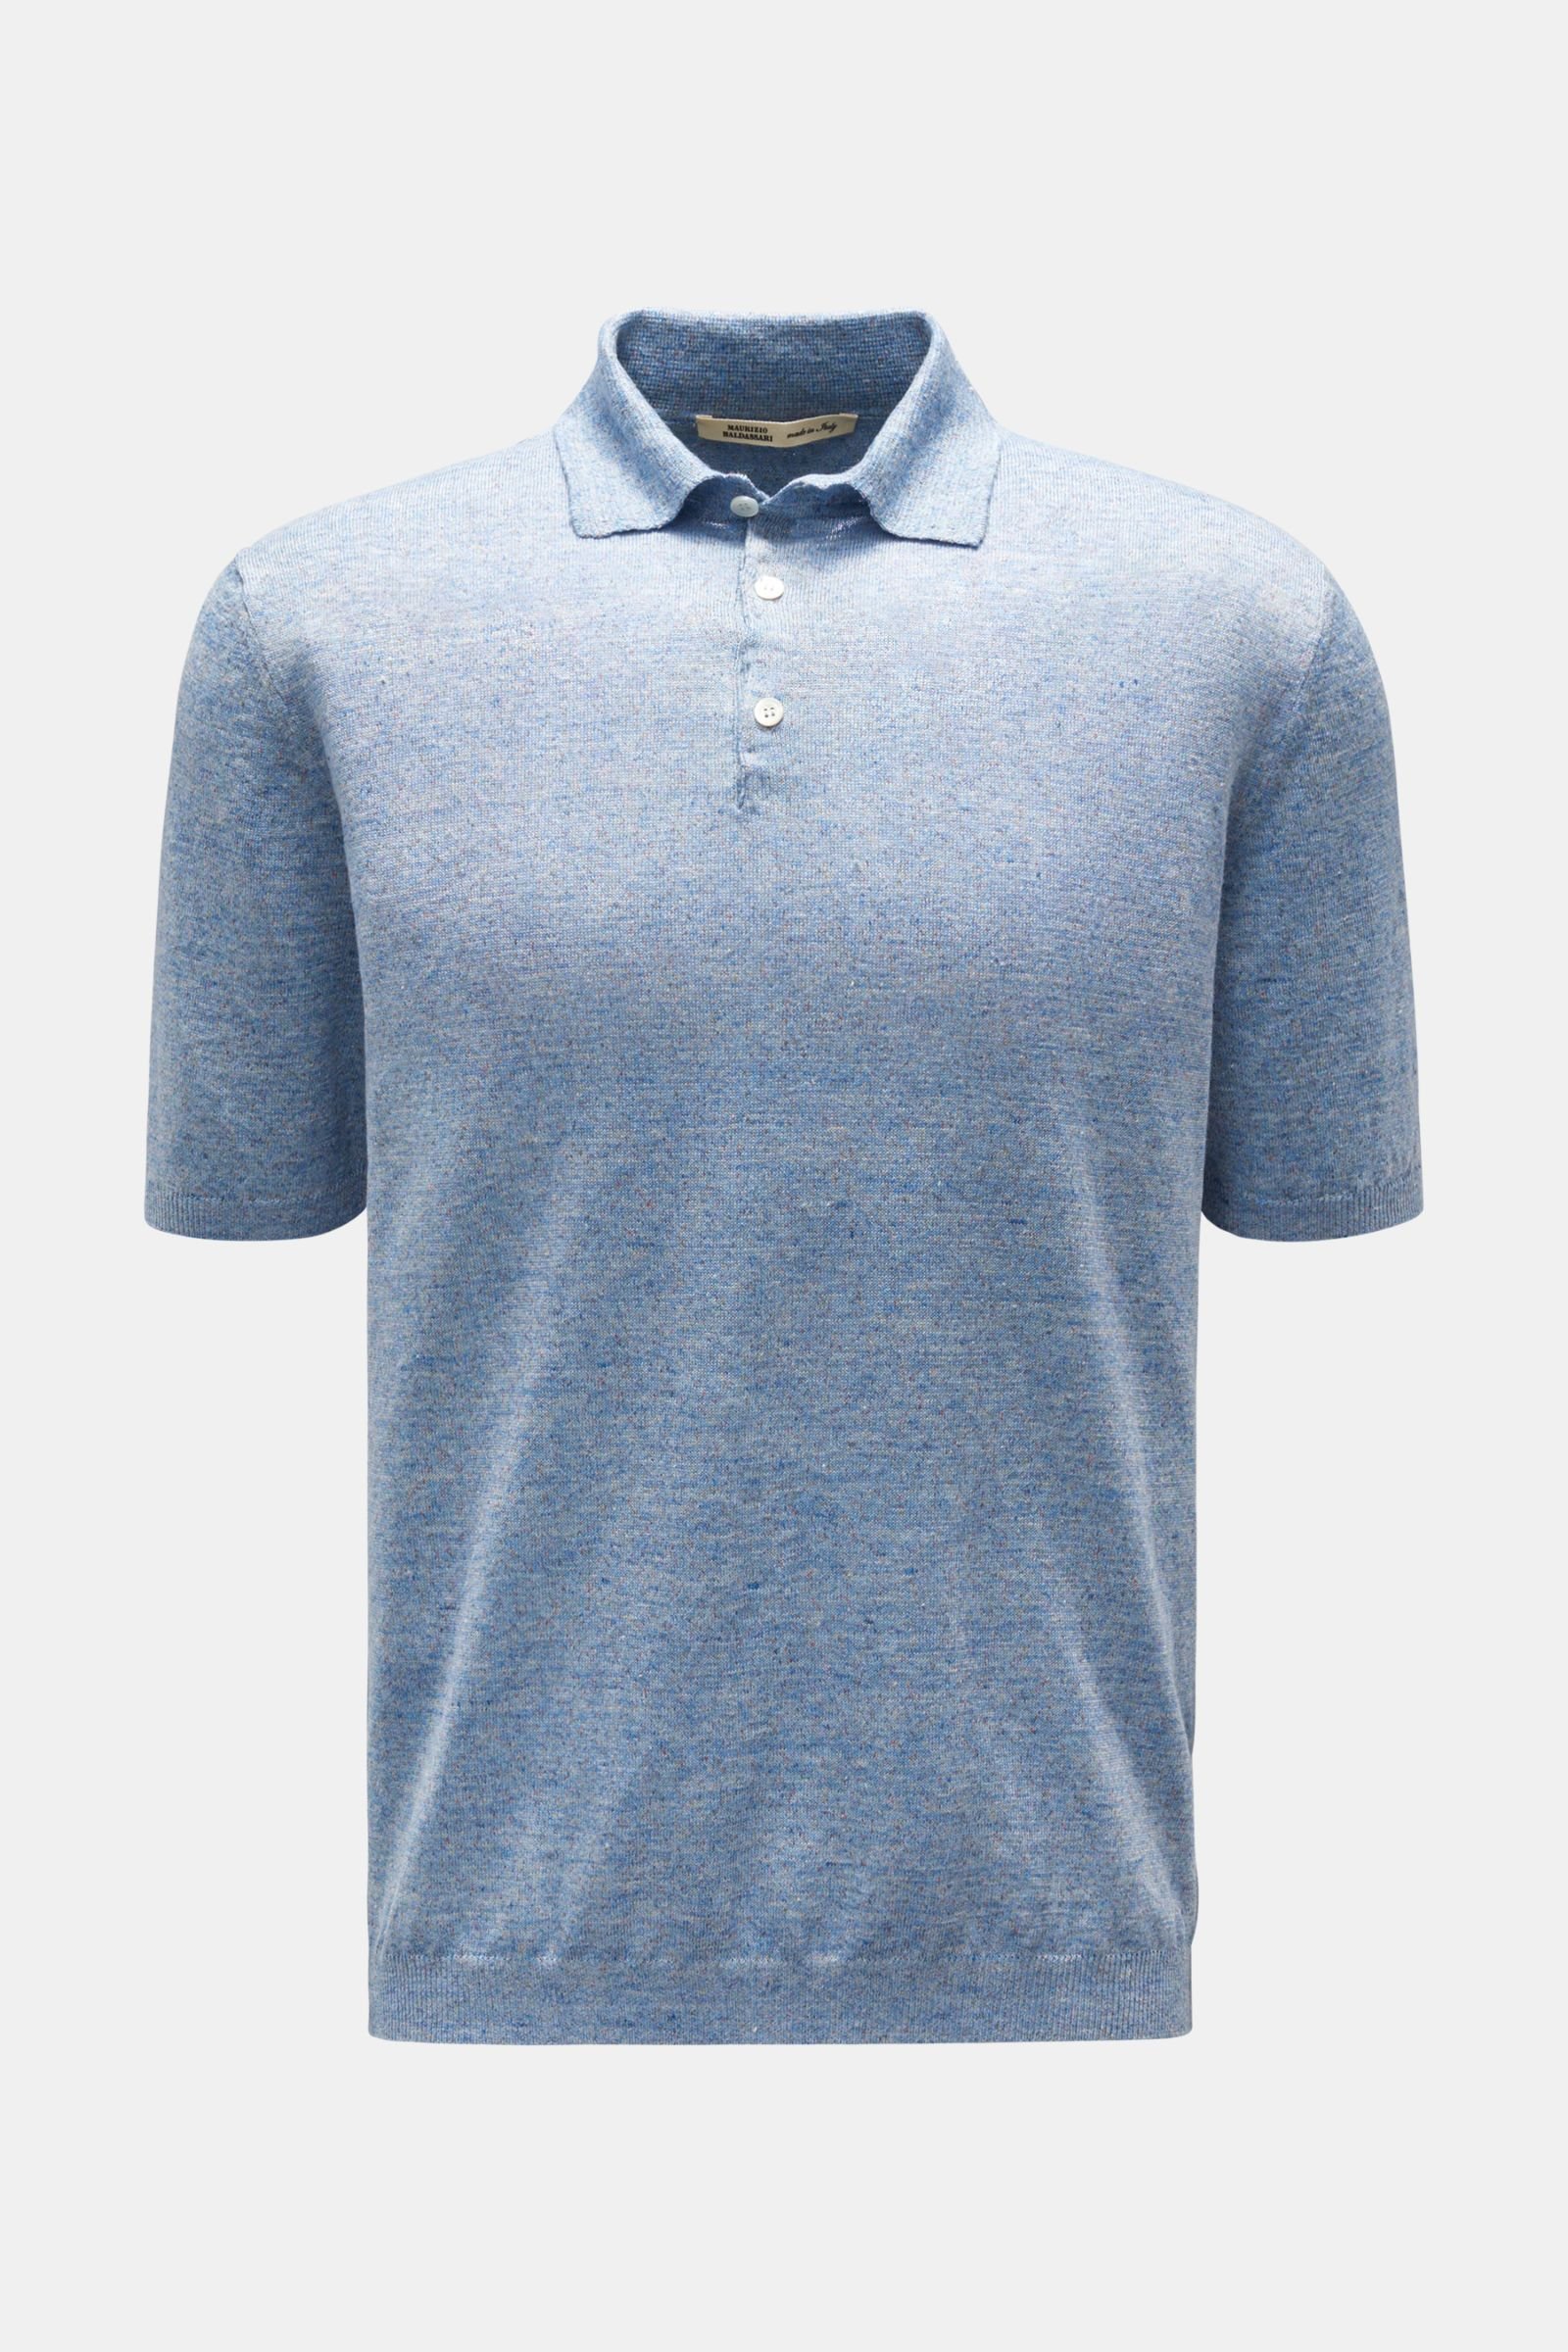 Linen short sleeve knit polo in smoky blue